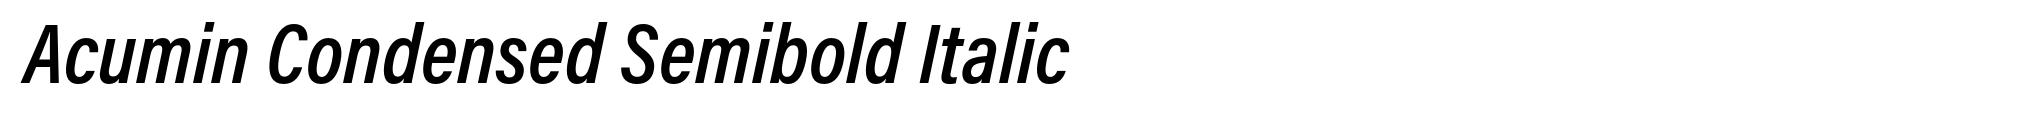 Acumin Condensed Semibold Italic image